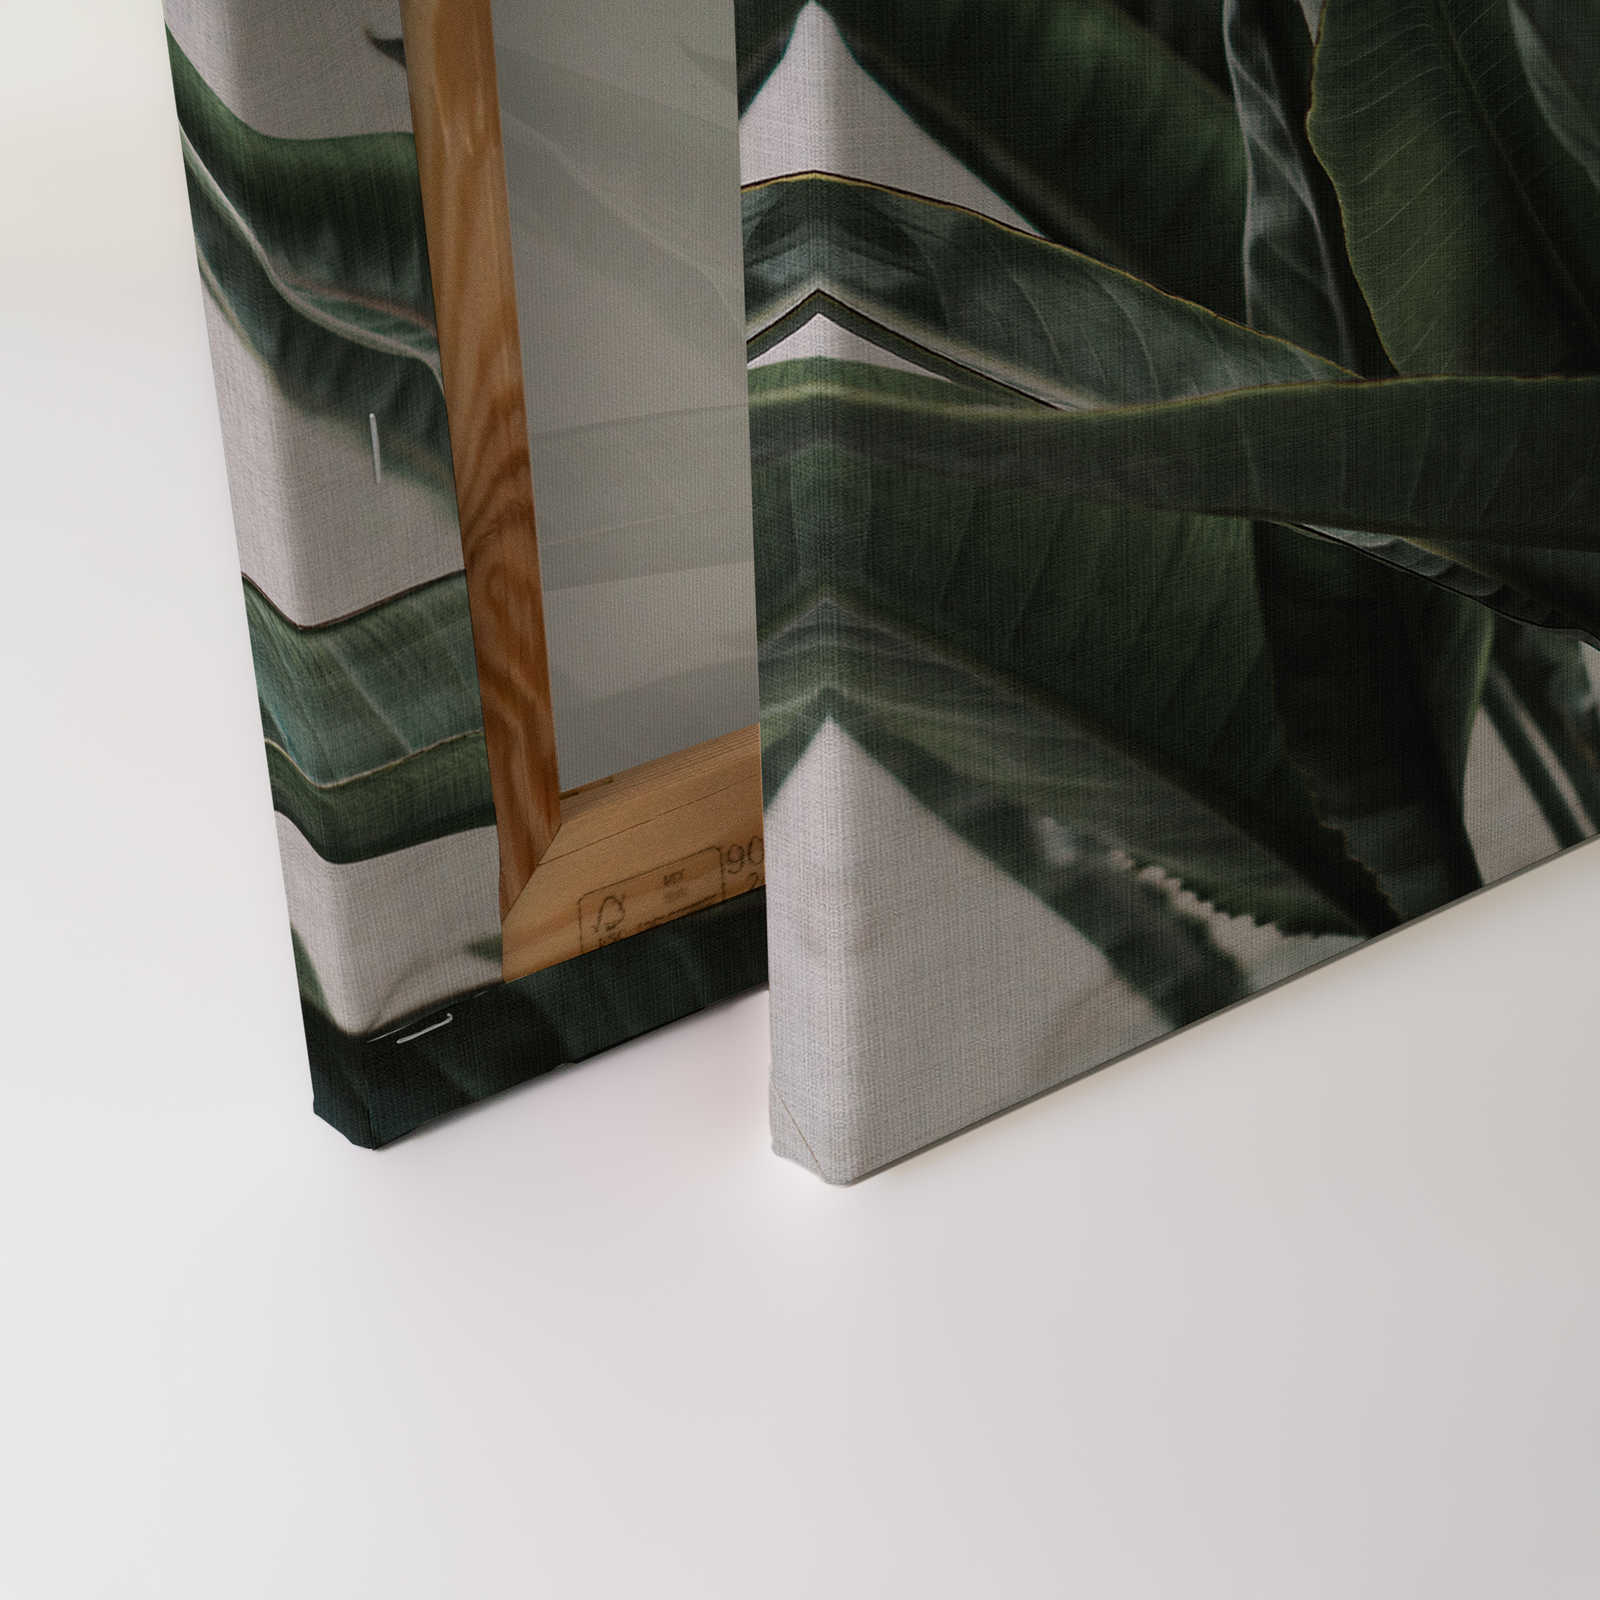             Urban jungle 2 - Palm leaves canvas picture, natural linen structure exotic plants - 0.90 m x 0.60 m
        